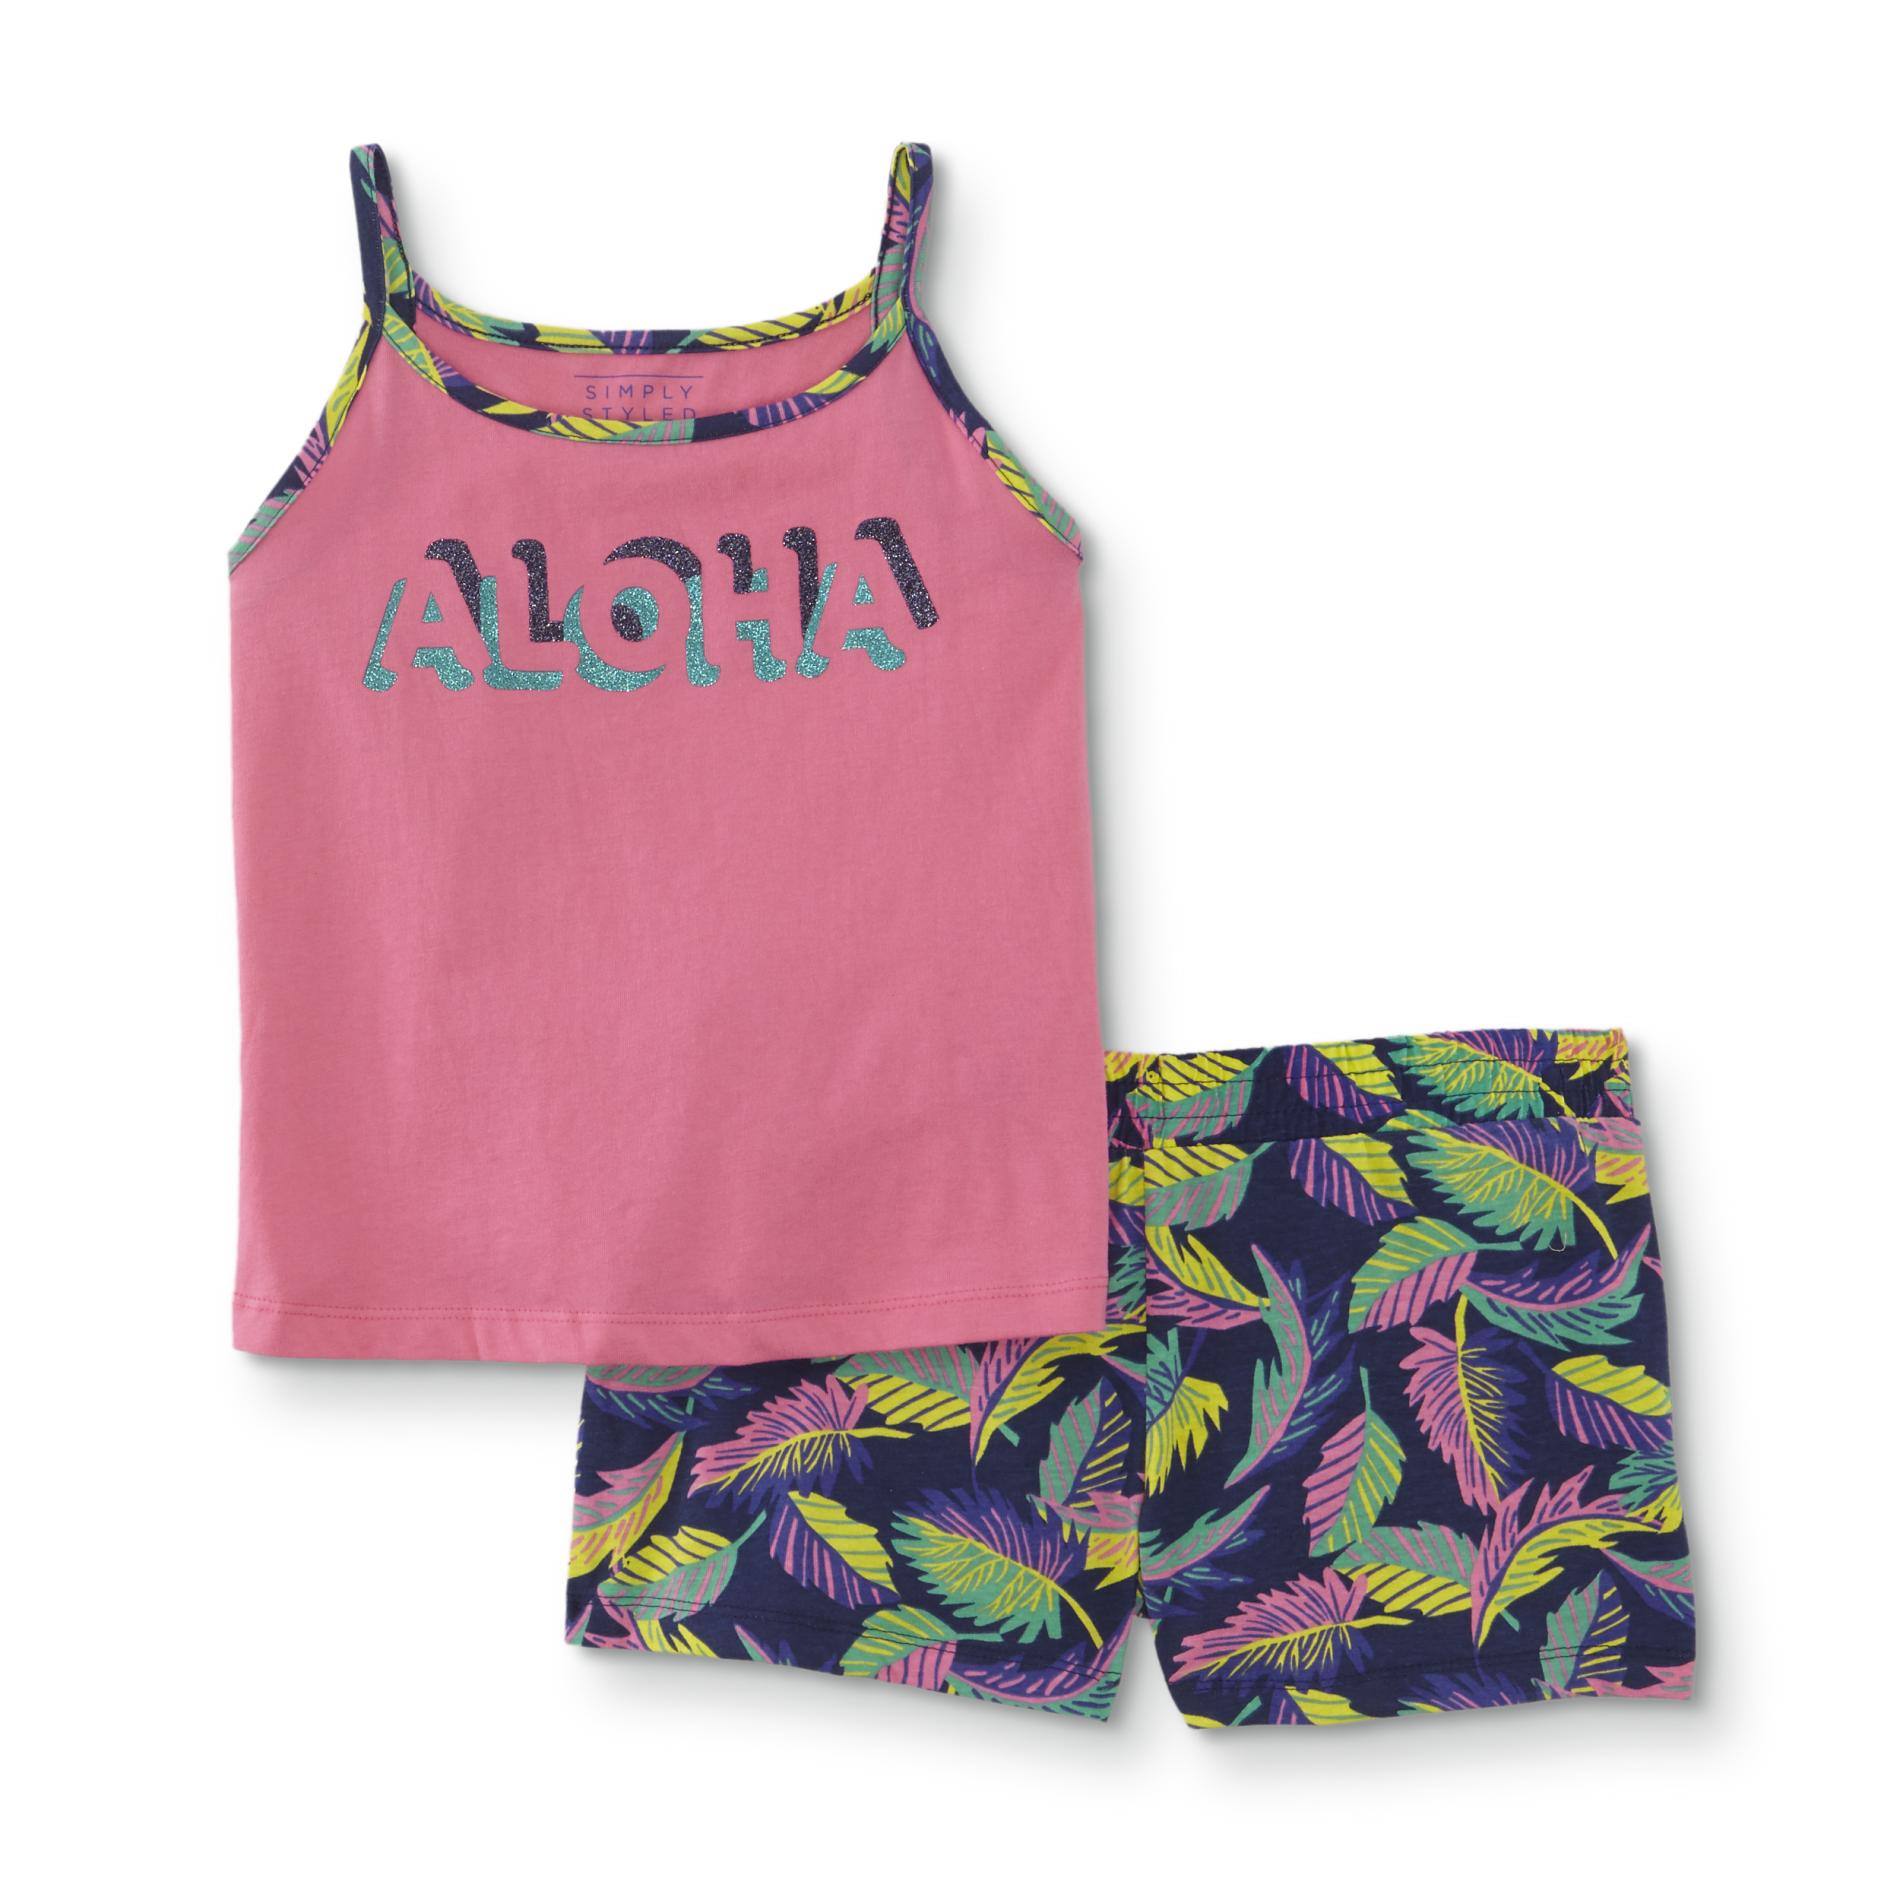 Simply Styled Girls' Tank Top & Shorts - Aloha